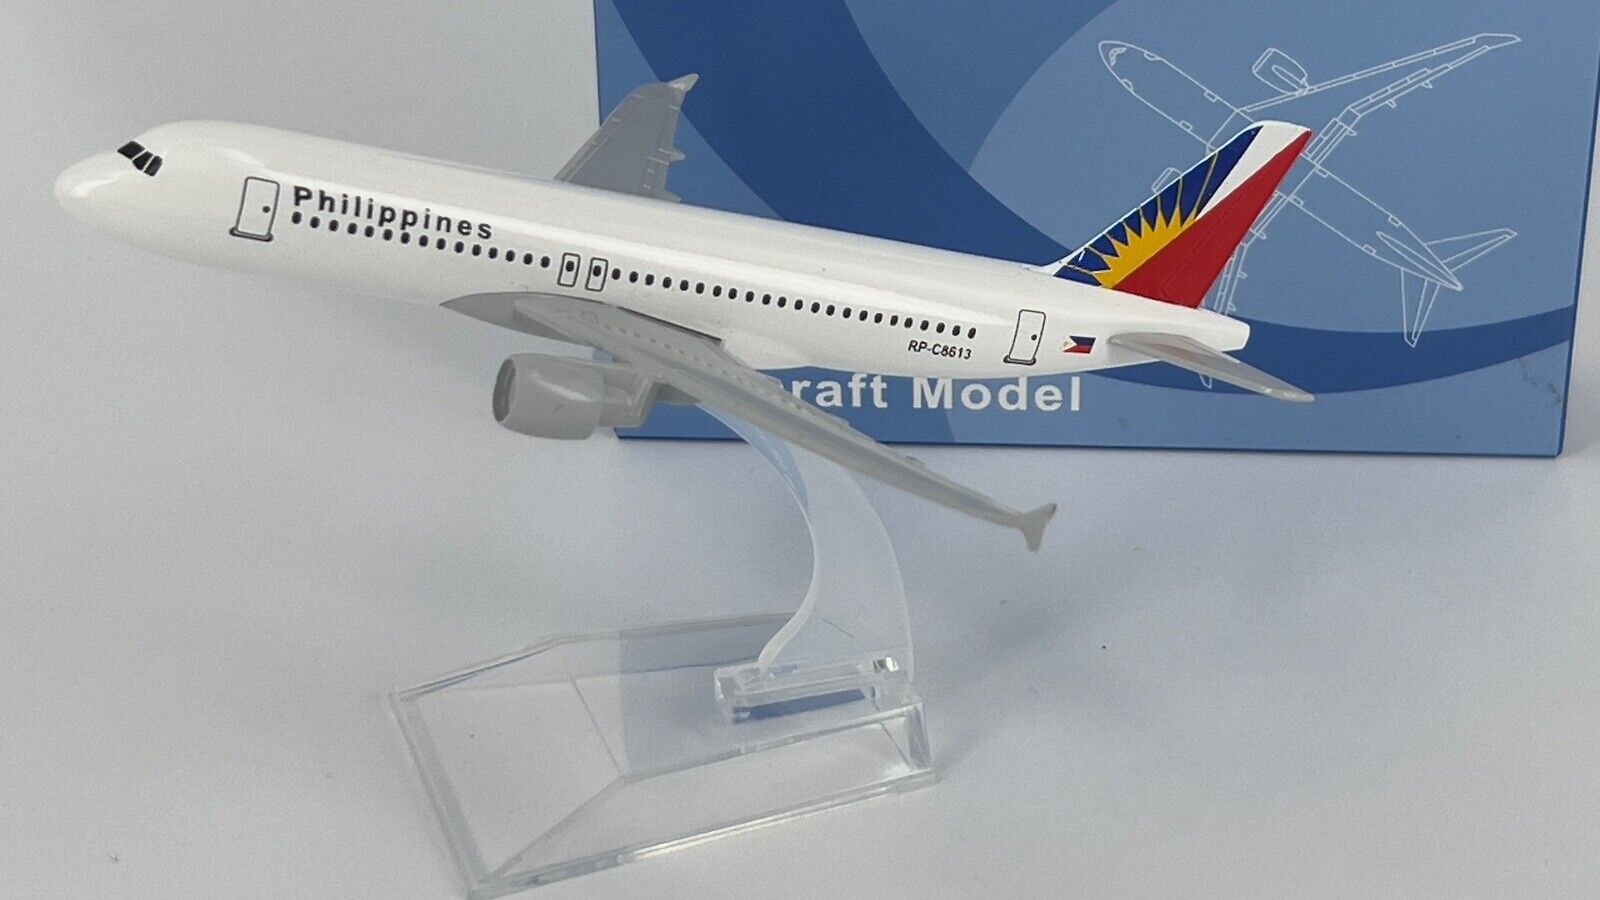 Philippines Air A320 Air Model Plane Scale 1:400 Apx 14cm Long Diecast Metal